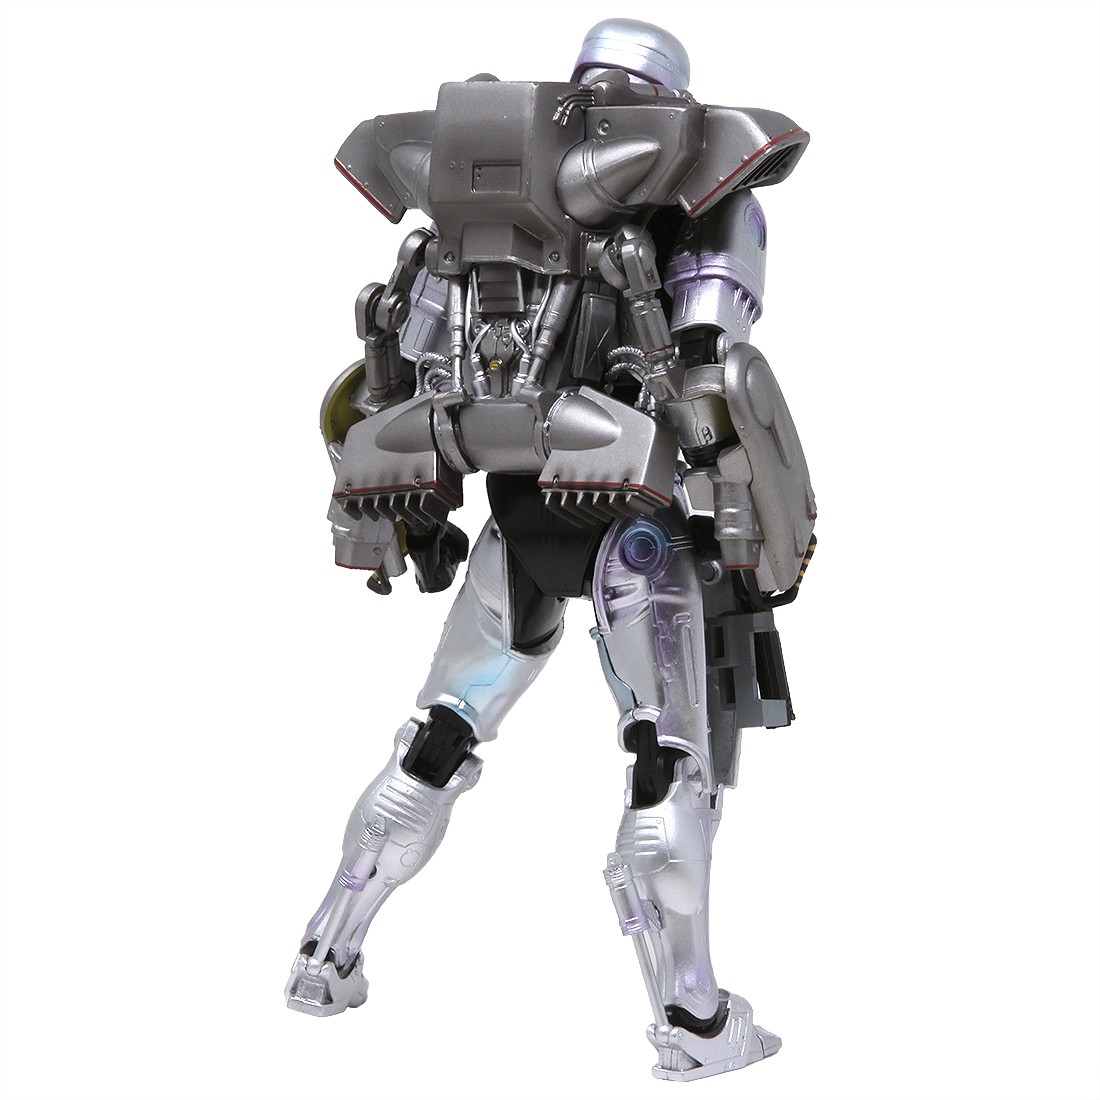 Medicom MAFEX Robocop 3 Figure (silver)